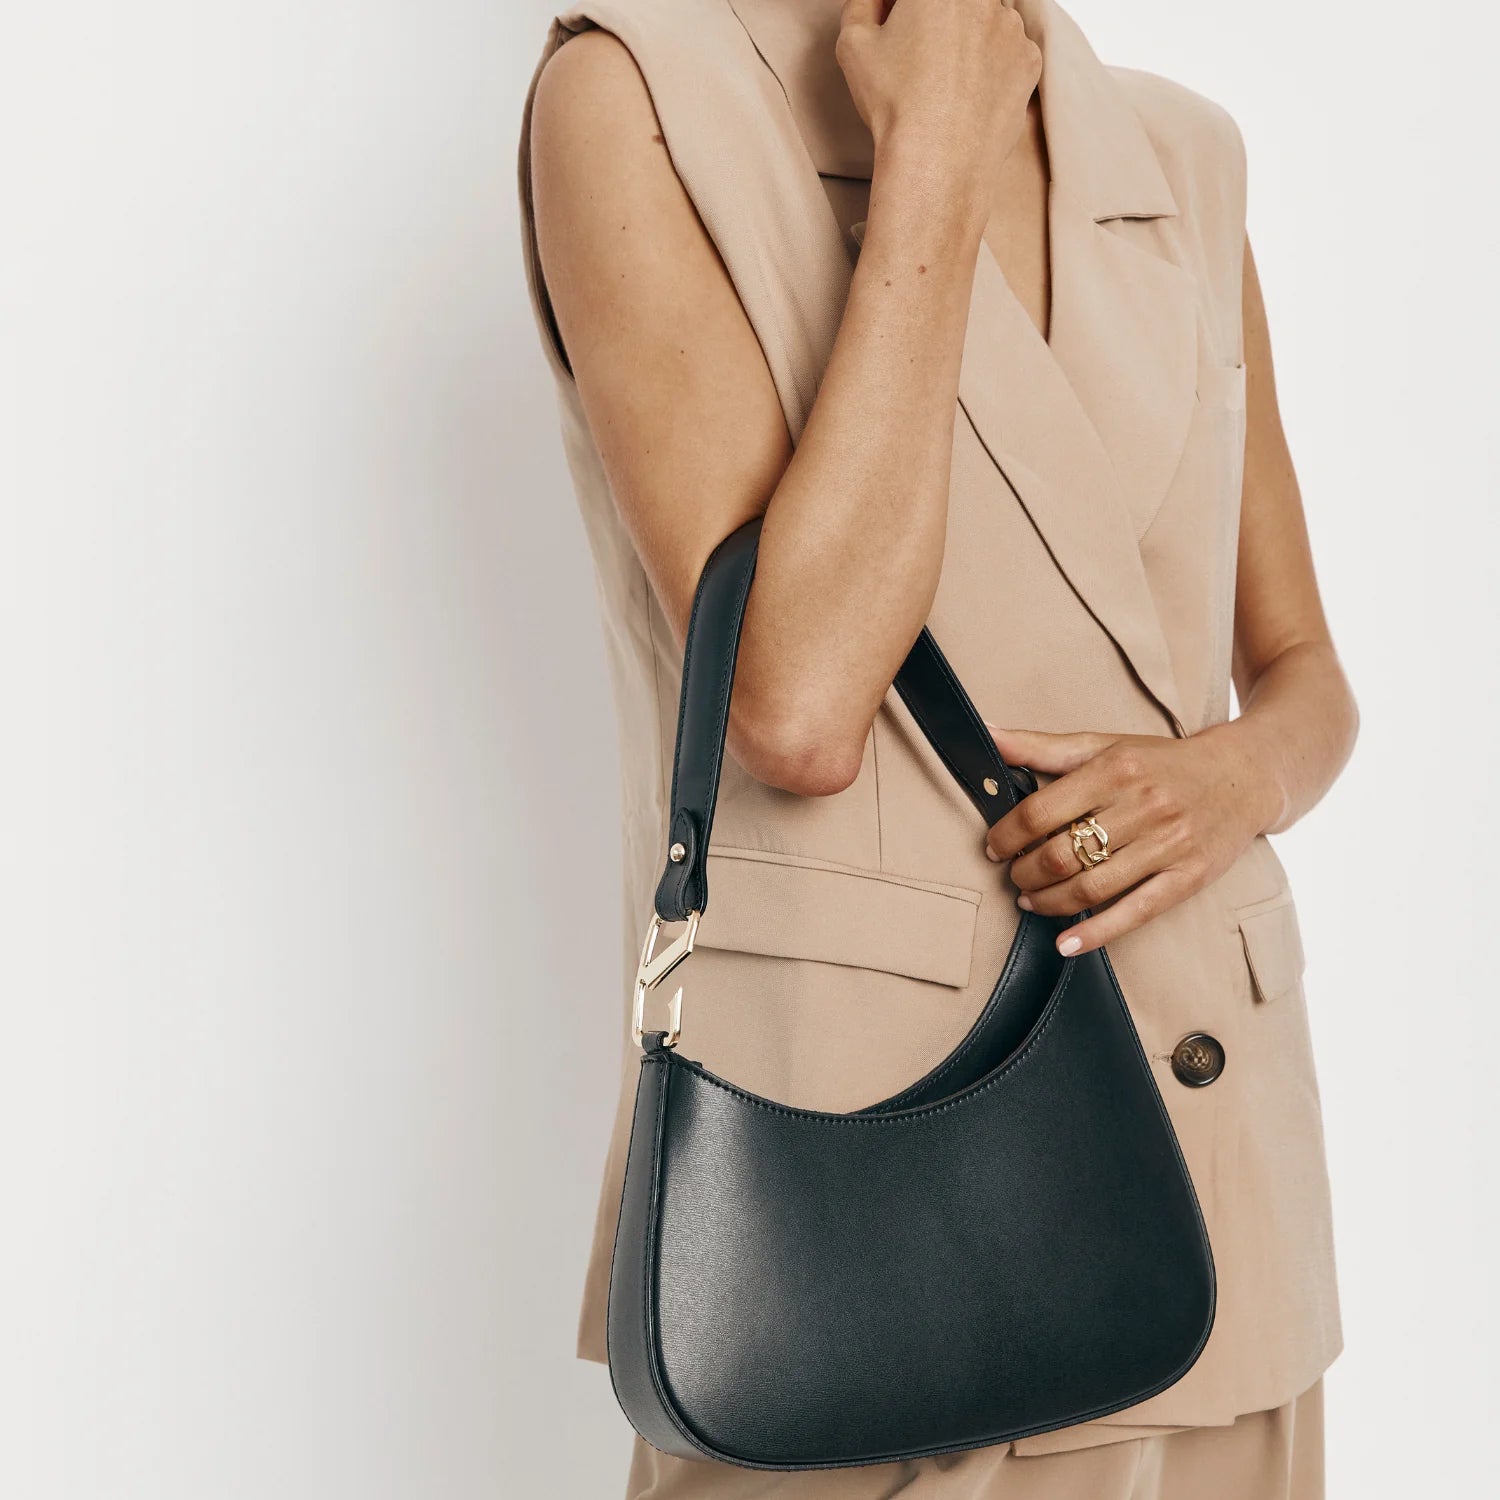 Alyssa Asymmetrical Bag - Black